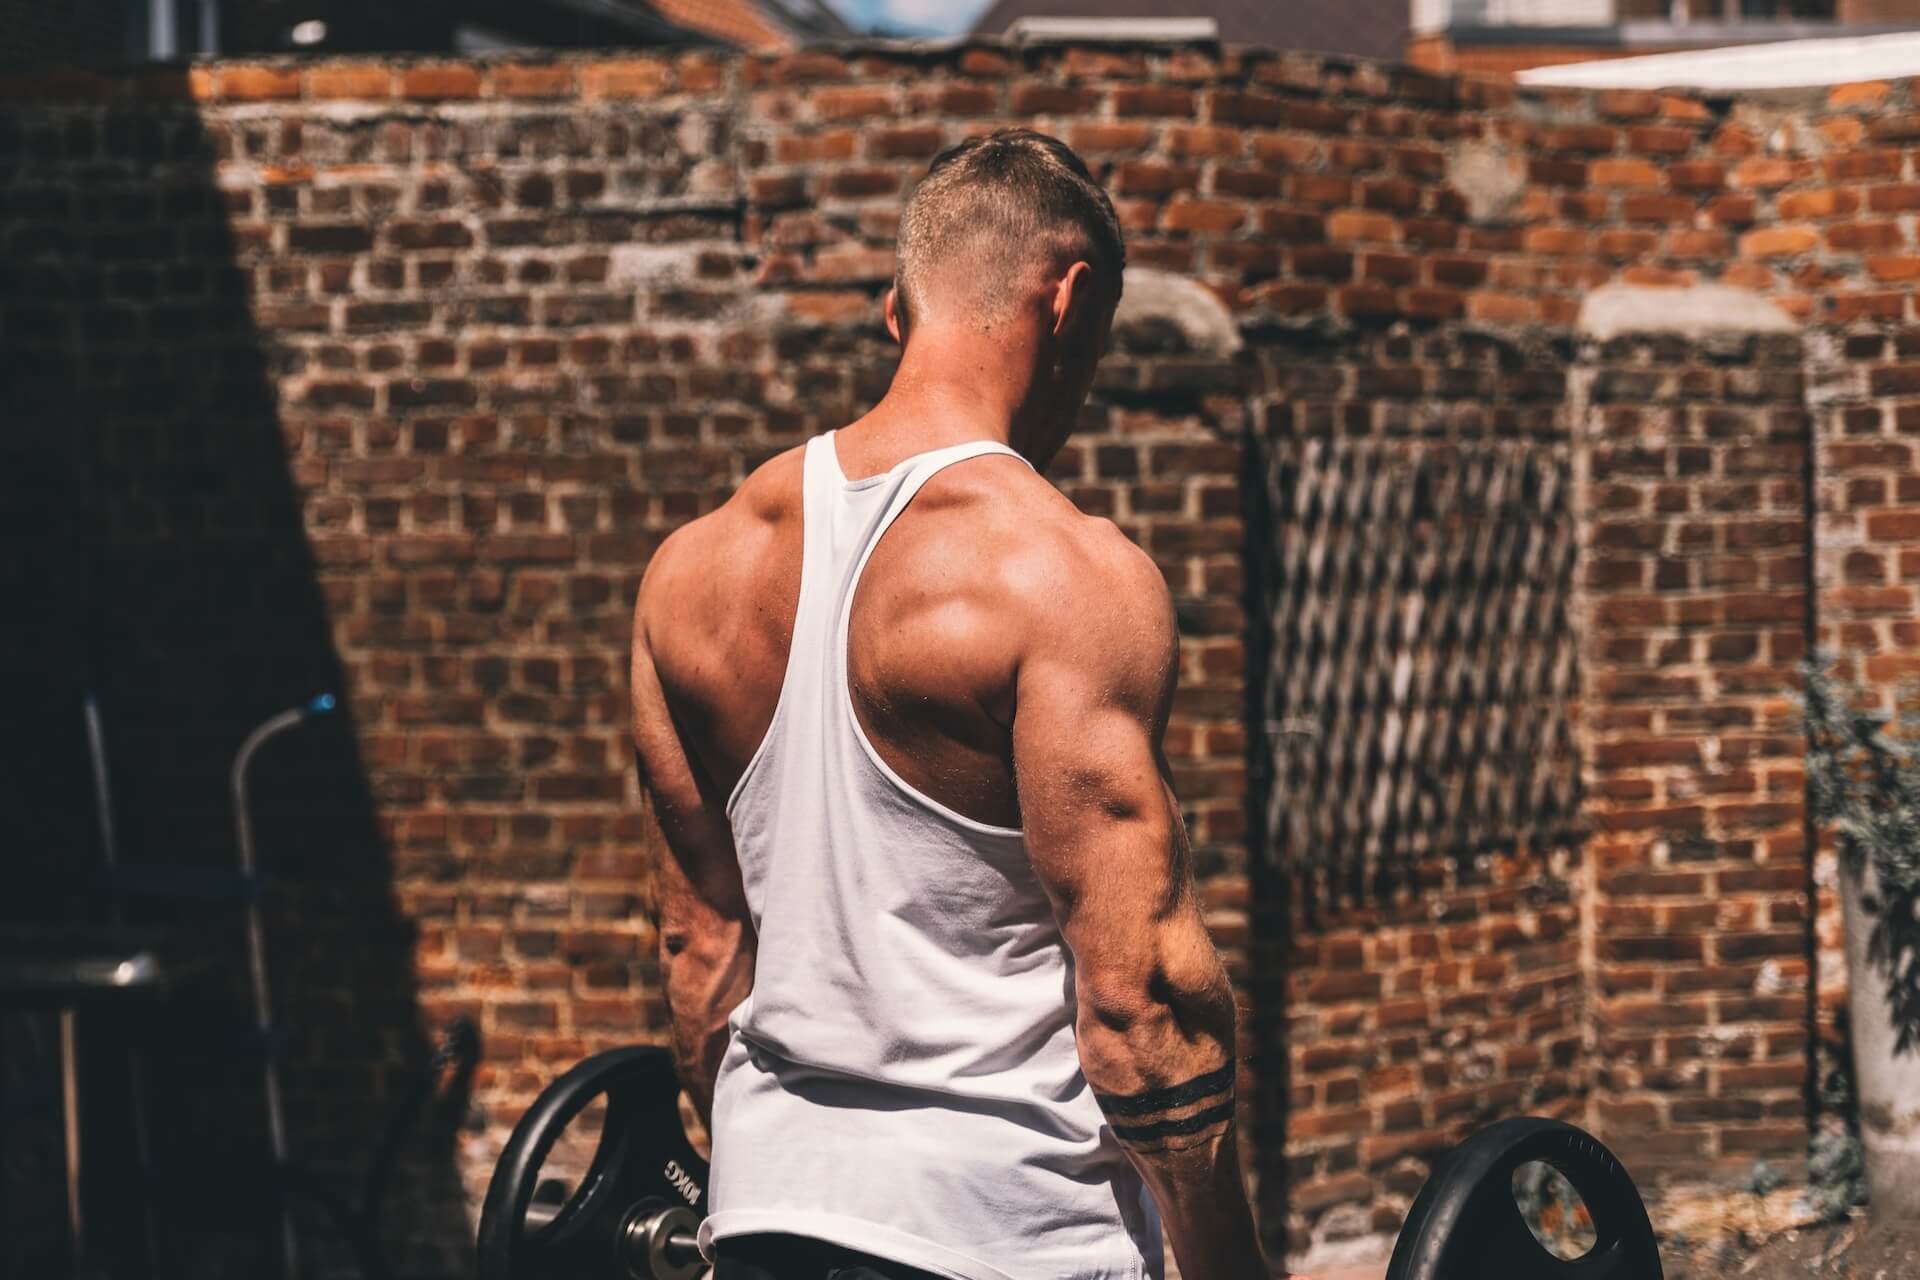 Back shot of muscular man.